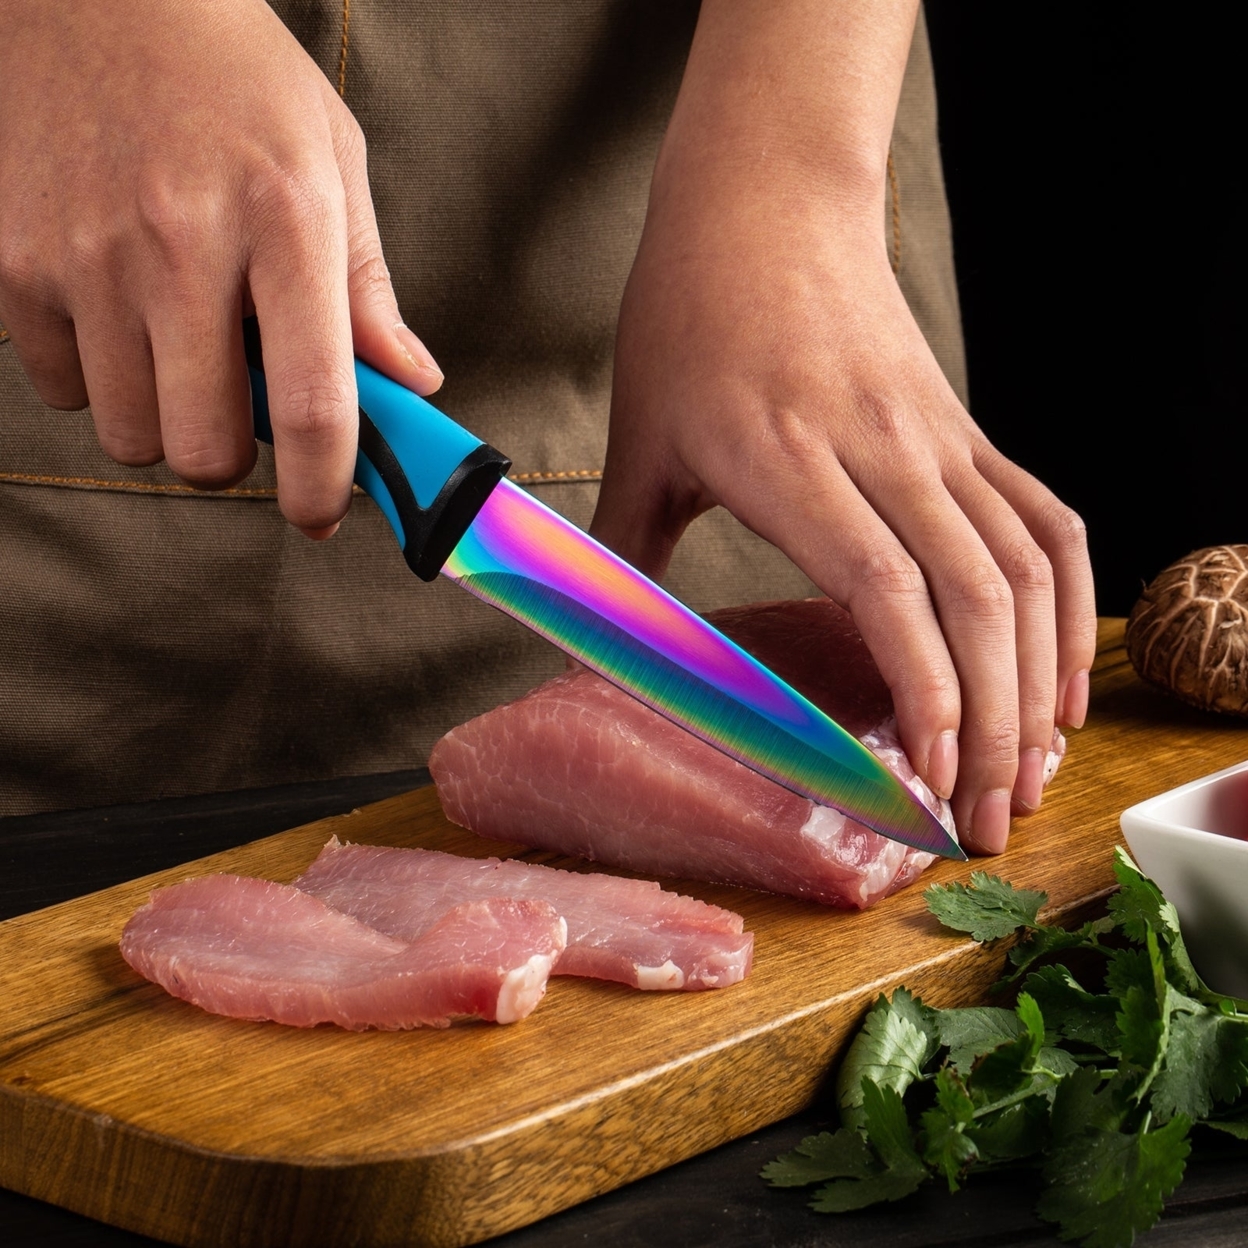 SiliSlick Stainless Steel Steak Knife Blue Handle Set Of 4 - Titanium Coated Rainbow Iridescent Kitchen Straight Edge For Cutting Meat